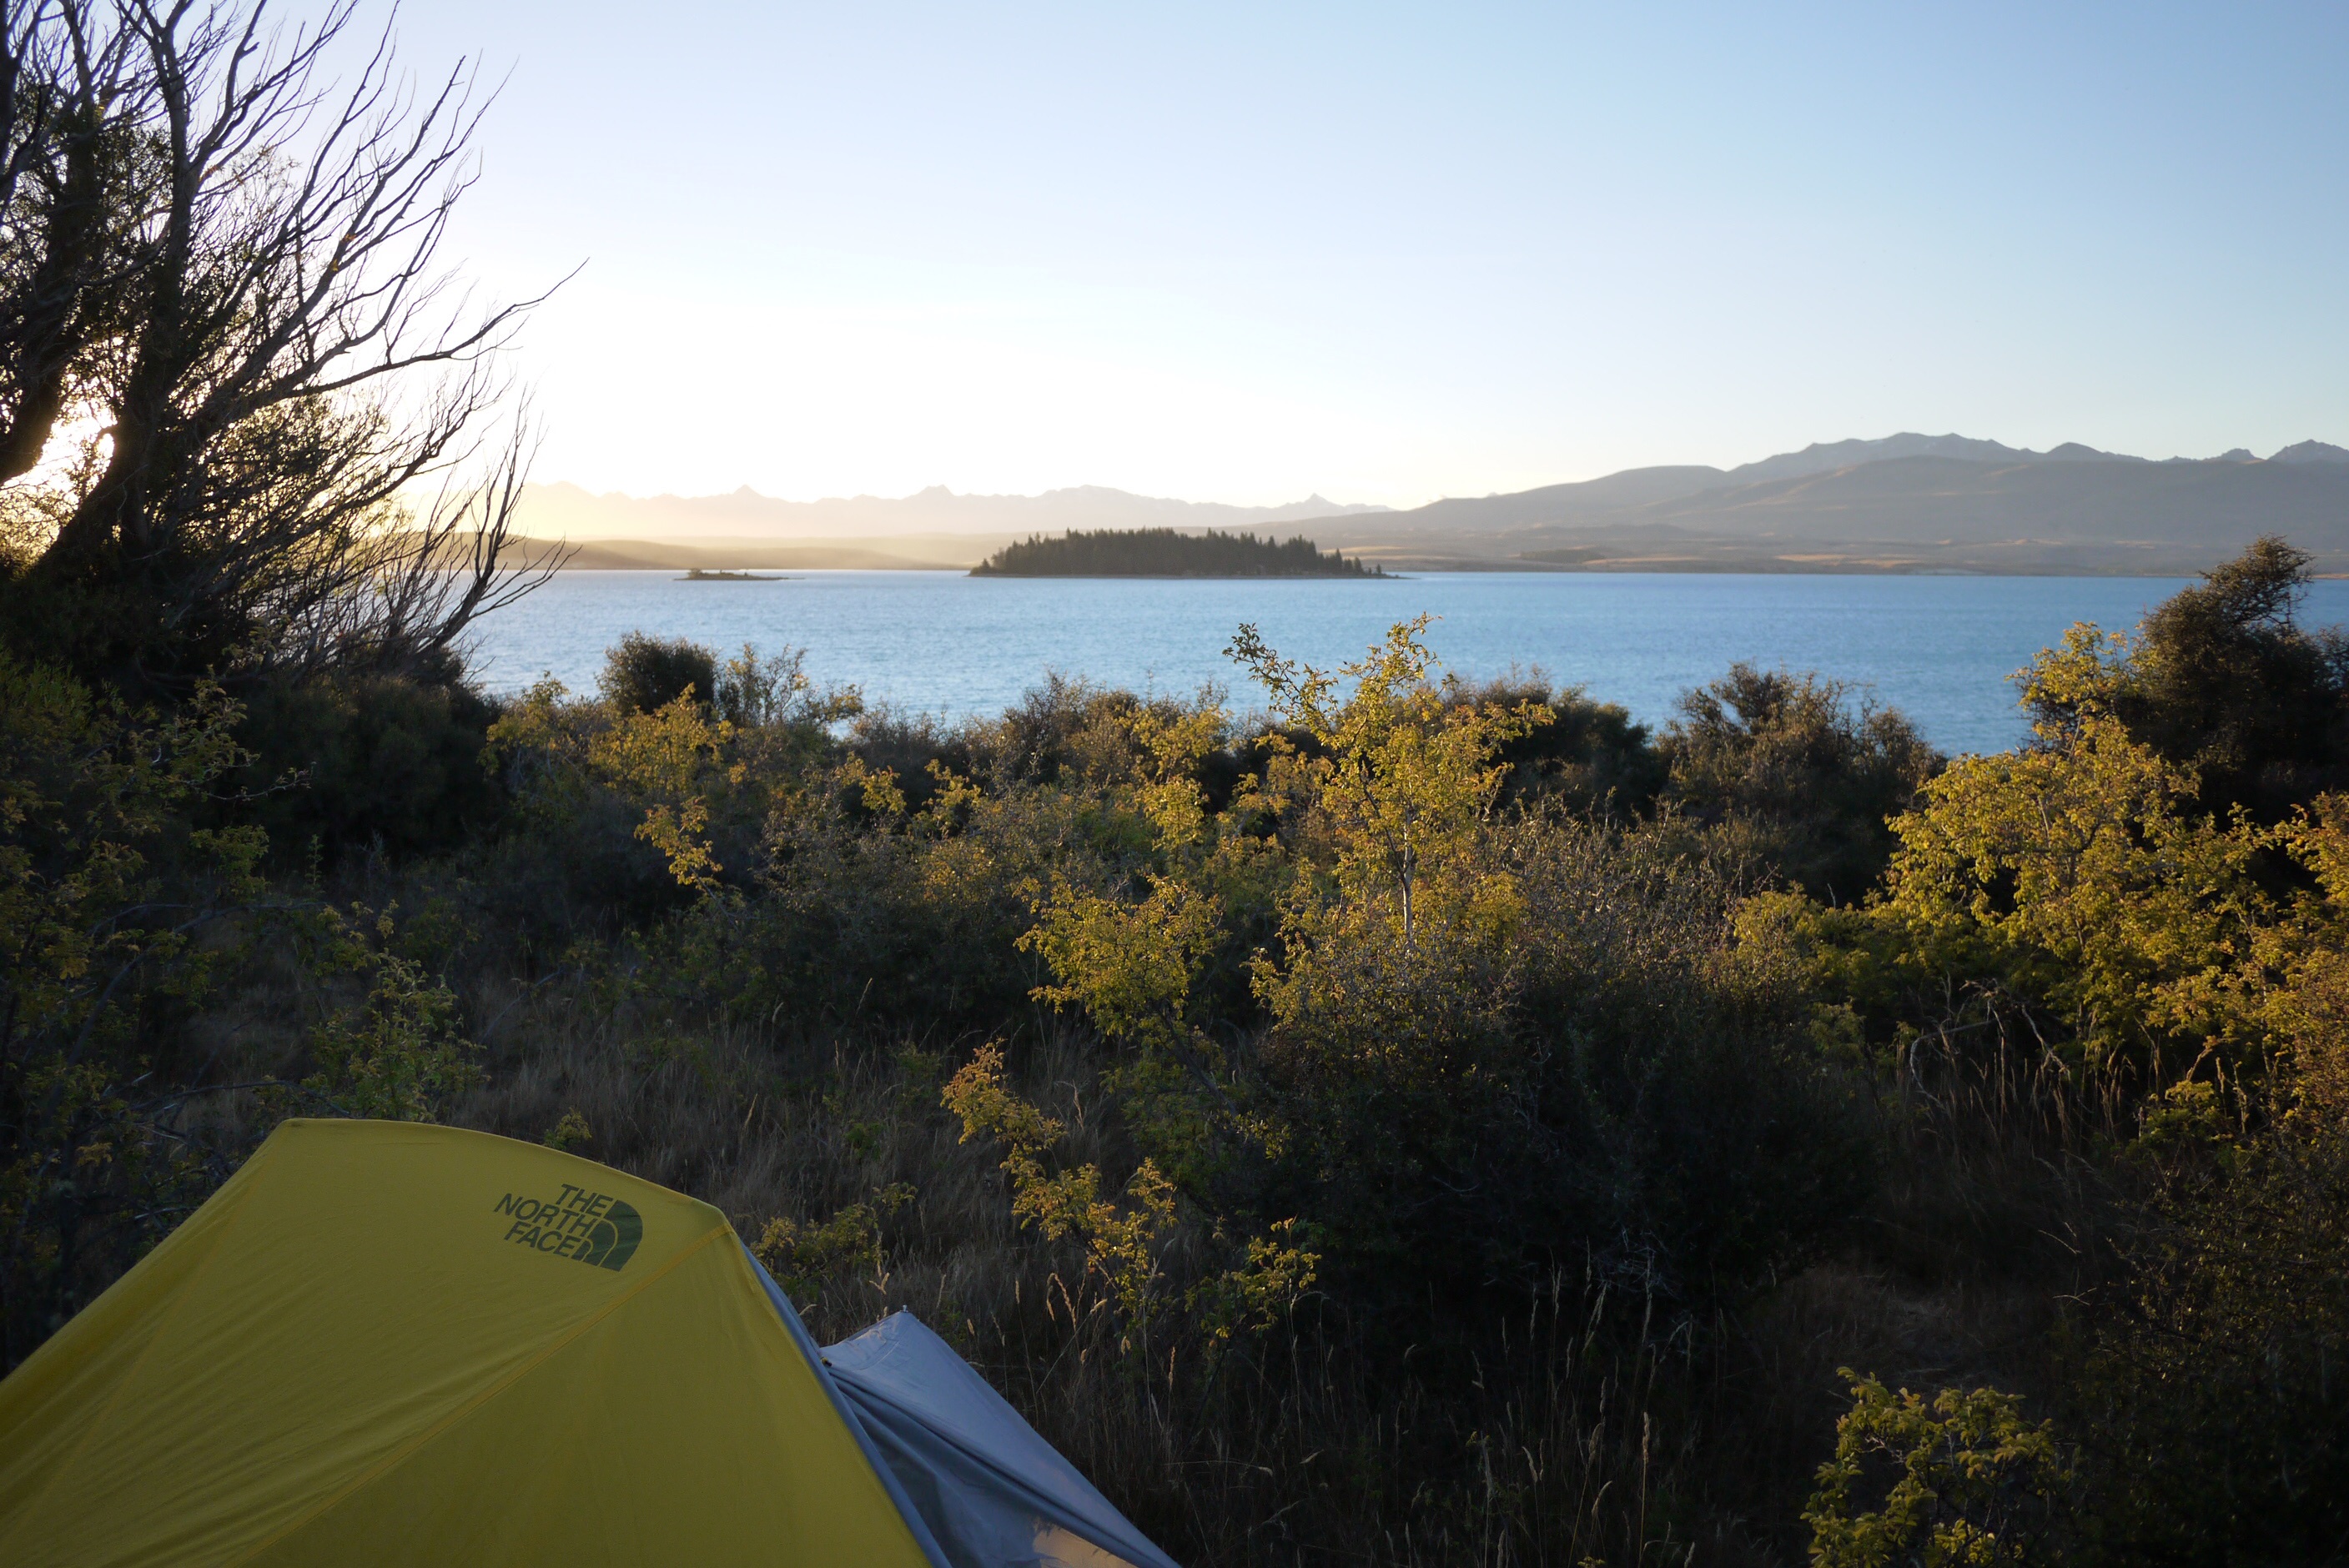 Camped on the shores of Lake Tekapo